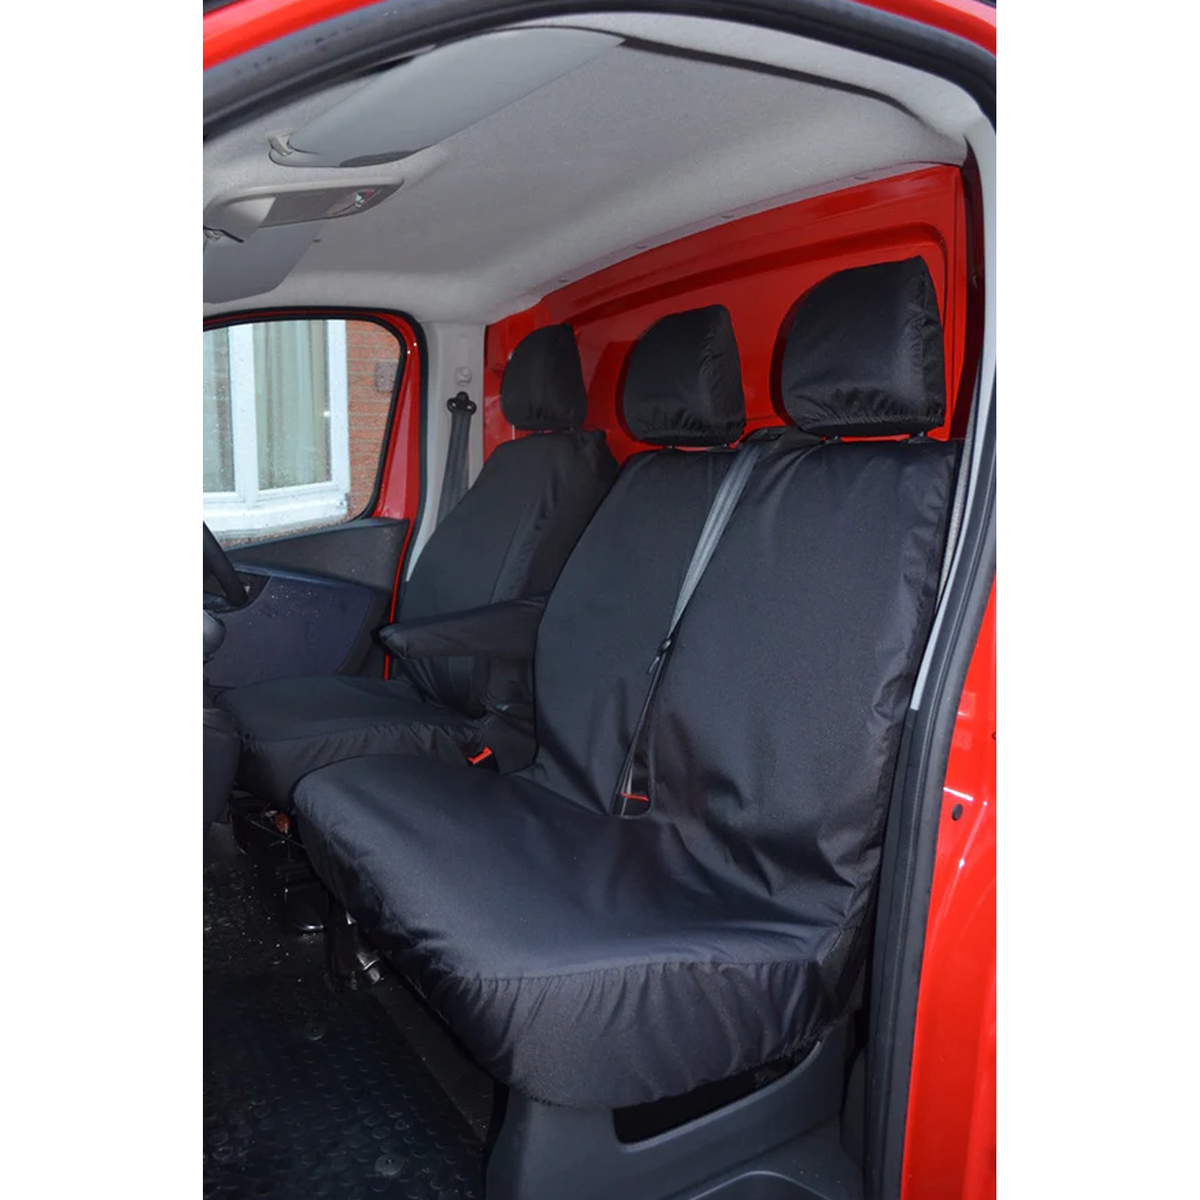 Vauxhall Vivaro 2014-2019 Base Model Driver And Front Double Passenger Seat Covers - Black